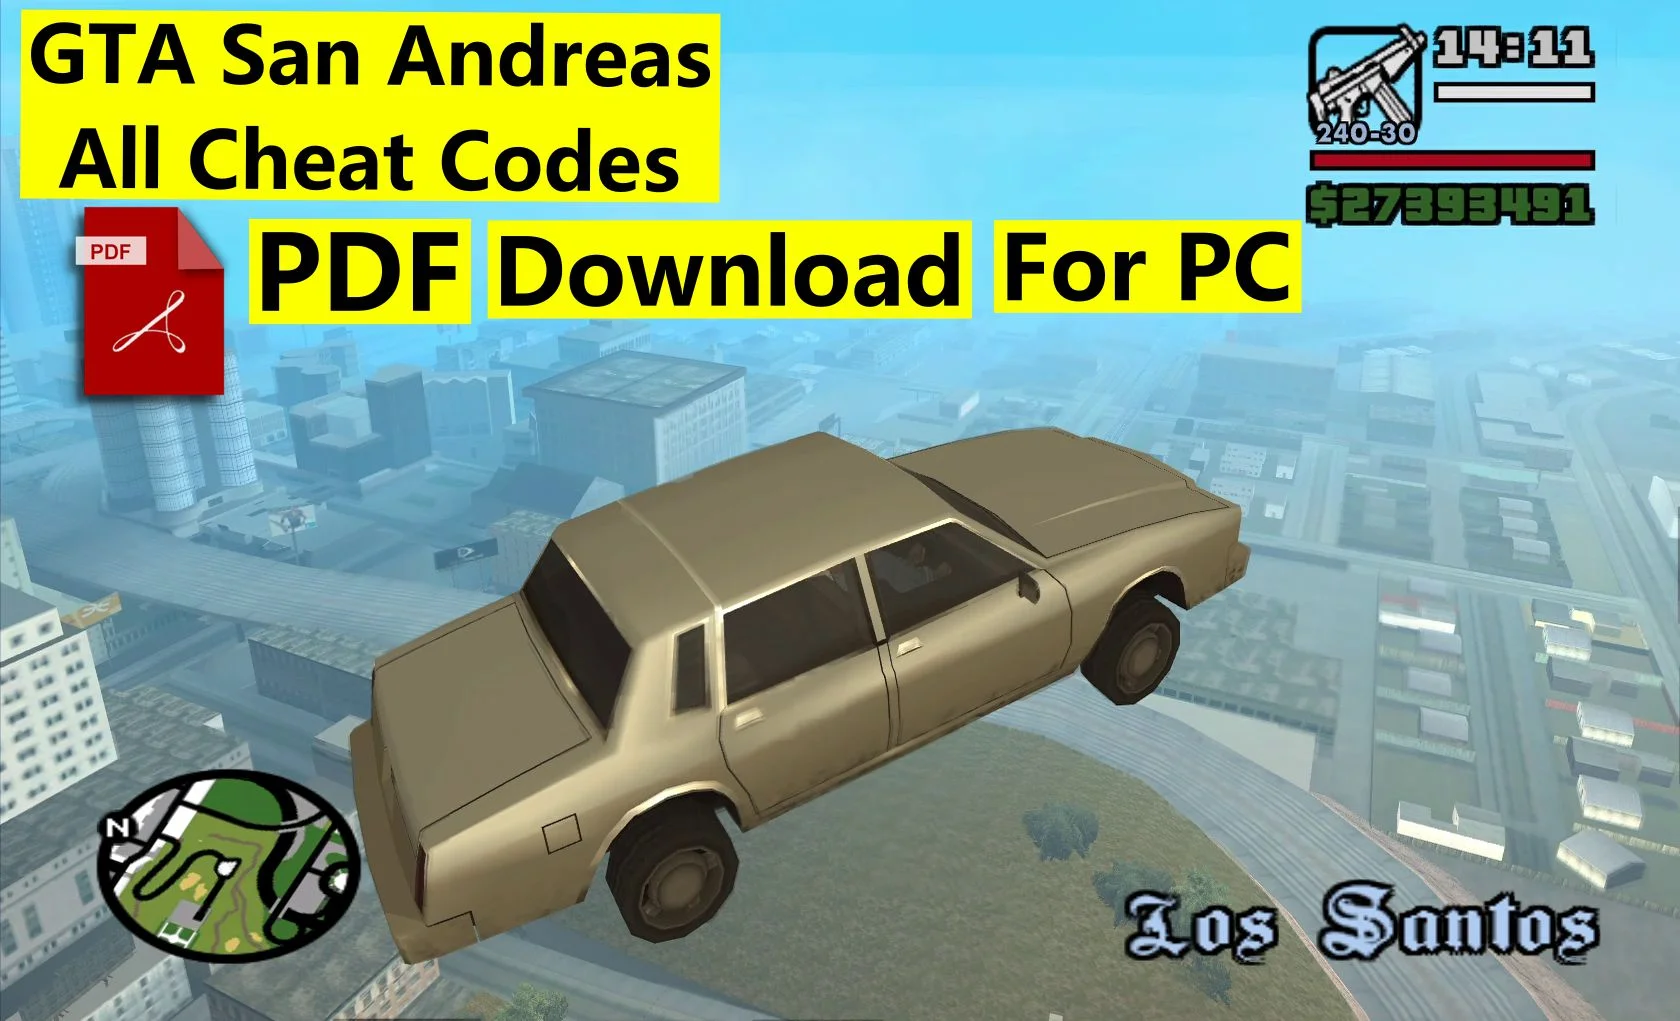 Grand Theft Auto San Andreas - Cheat Codes, PDF